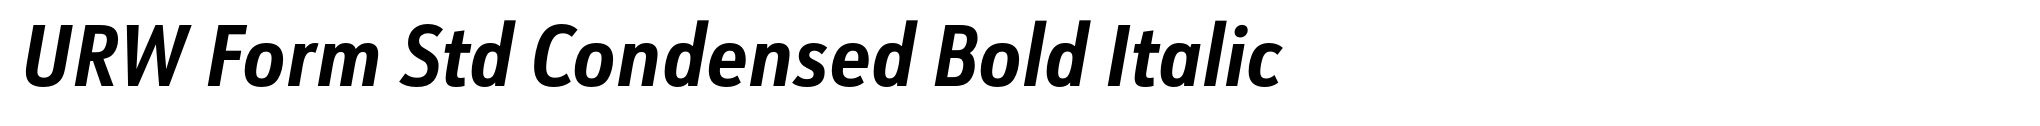 URW Form Std Condensed Bold Italic image